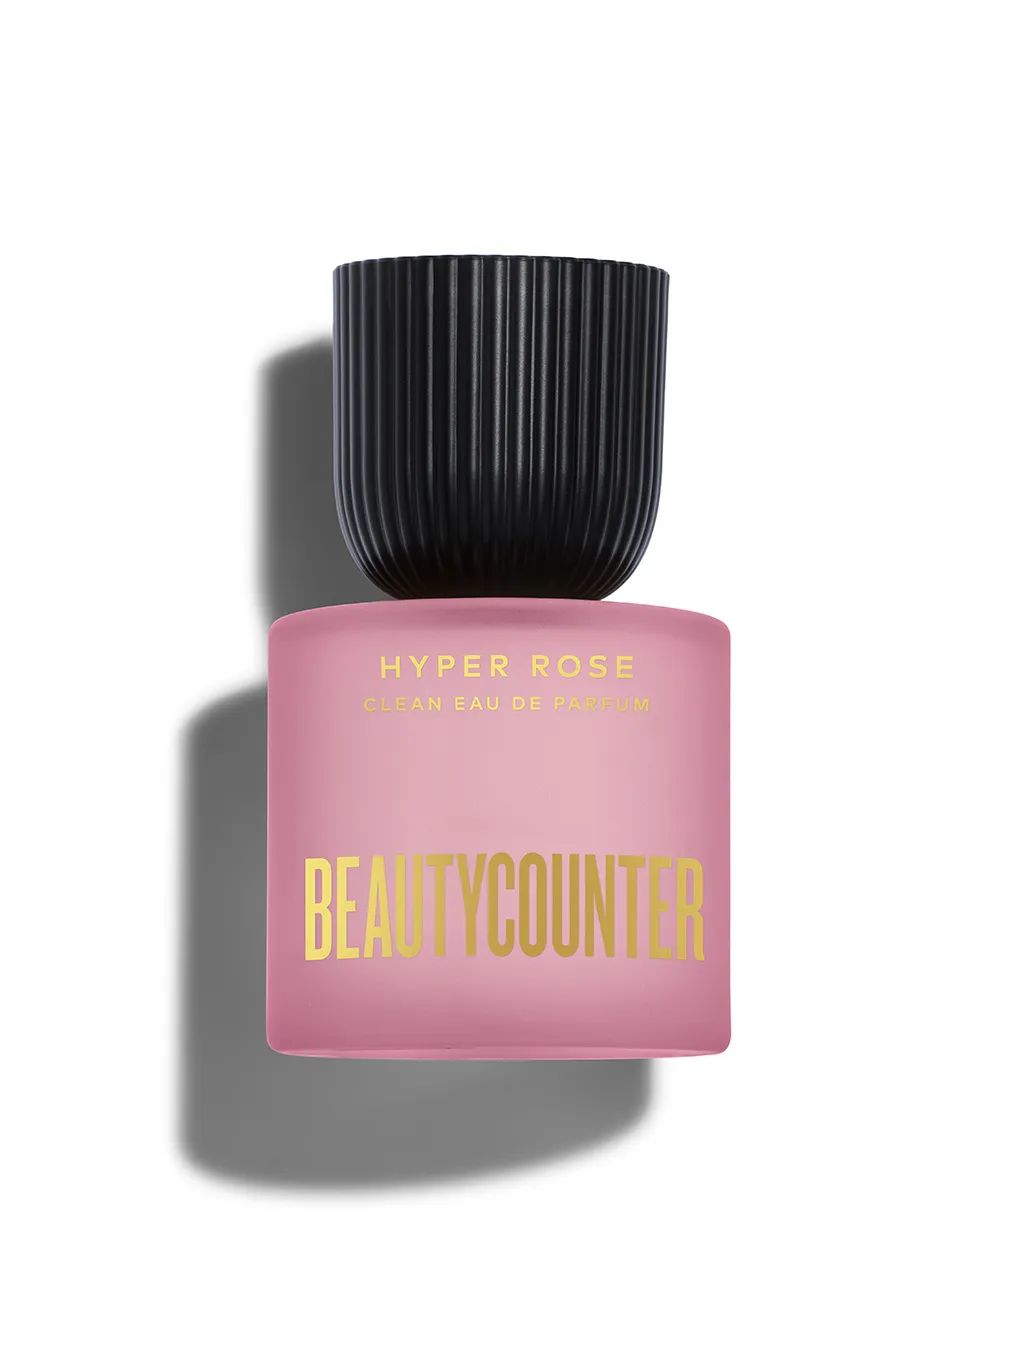 Hyper Rose Clean Eau De Parfum - Beautycounter - Skin Care, Makeup, Bath and Body and more! | Beautycounter.com